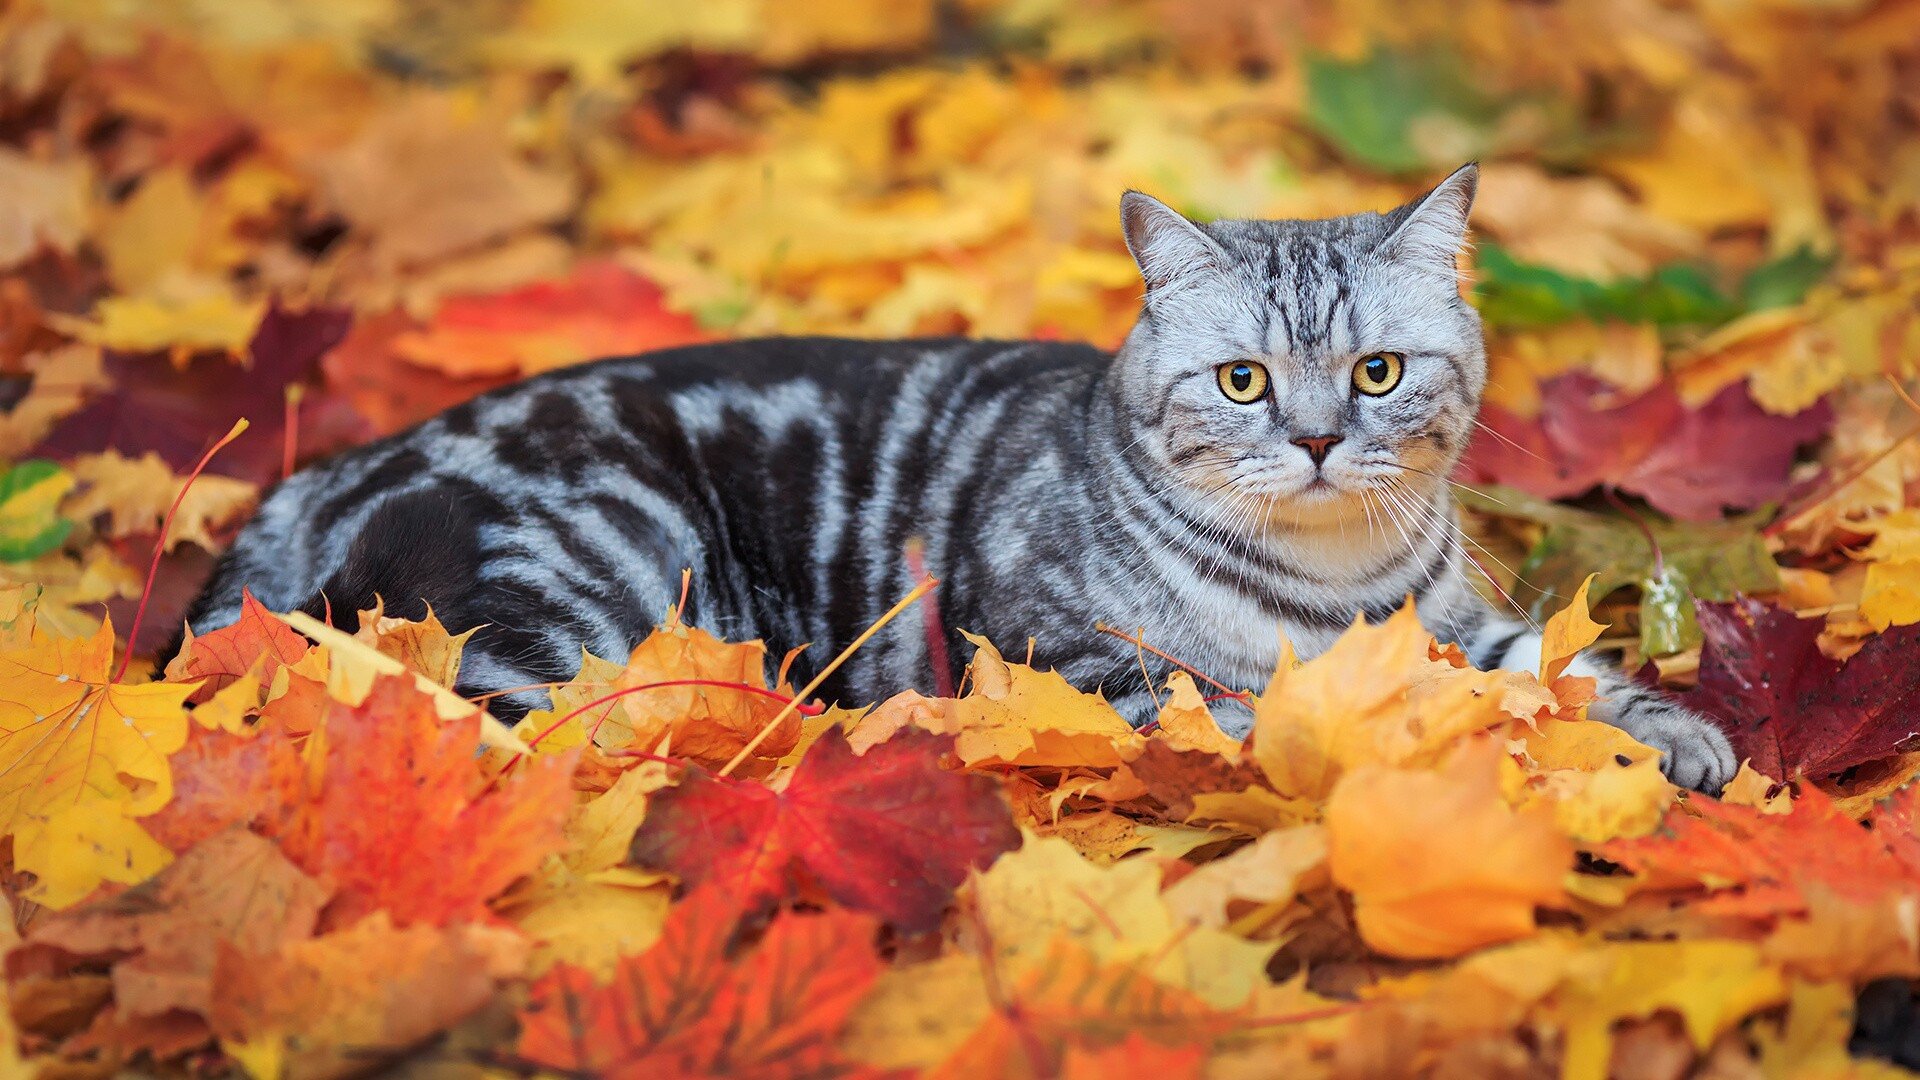 Cat lying on fallen leaves HD Wallpapers photo